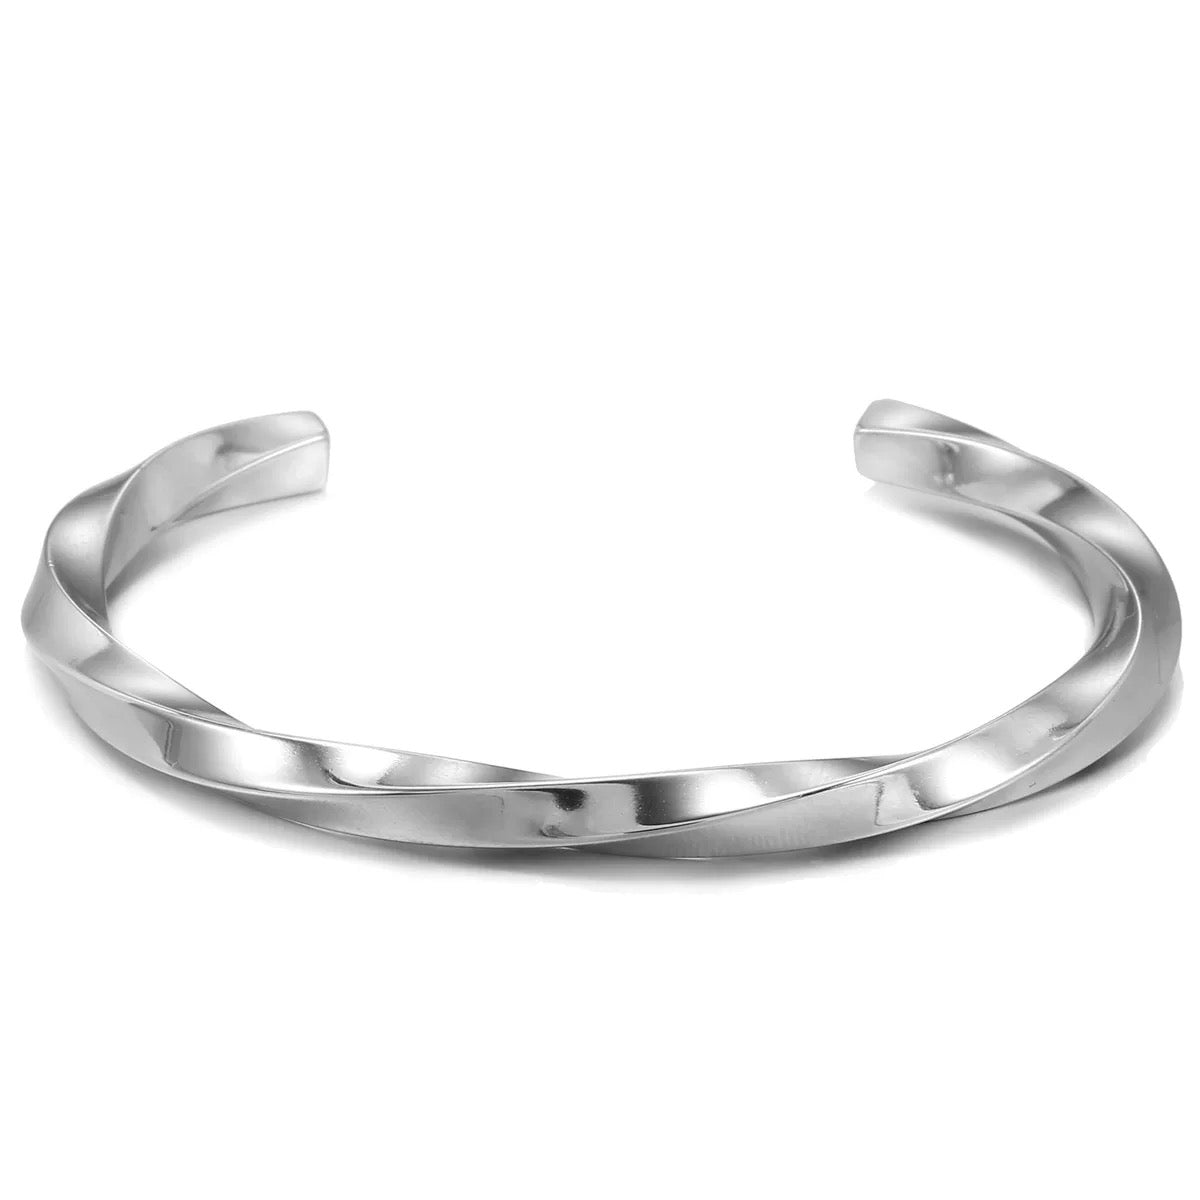 5pcs/lot Stainless Steel Twist Open Bangle for Women & Men Silver Women & Men Bracelets Charms Beads Beyond